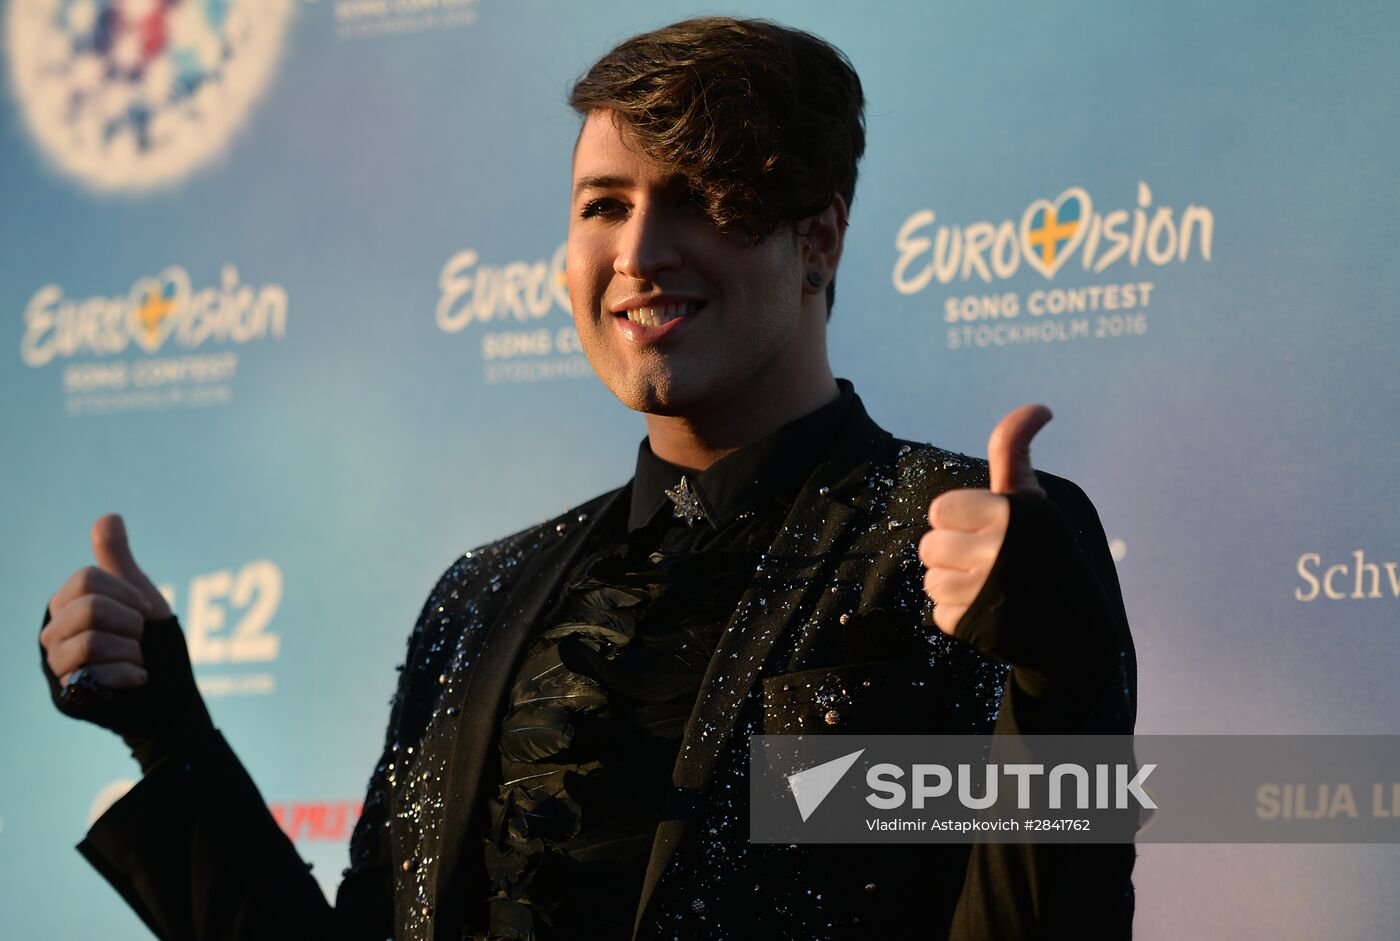 Eurovision Song Contest 2016 kicks off